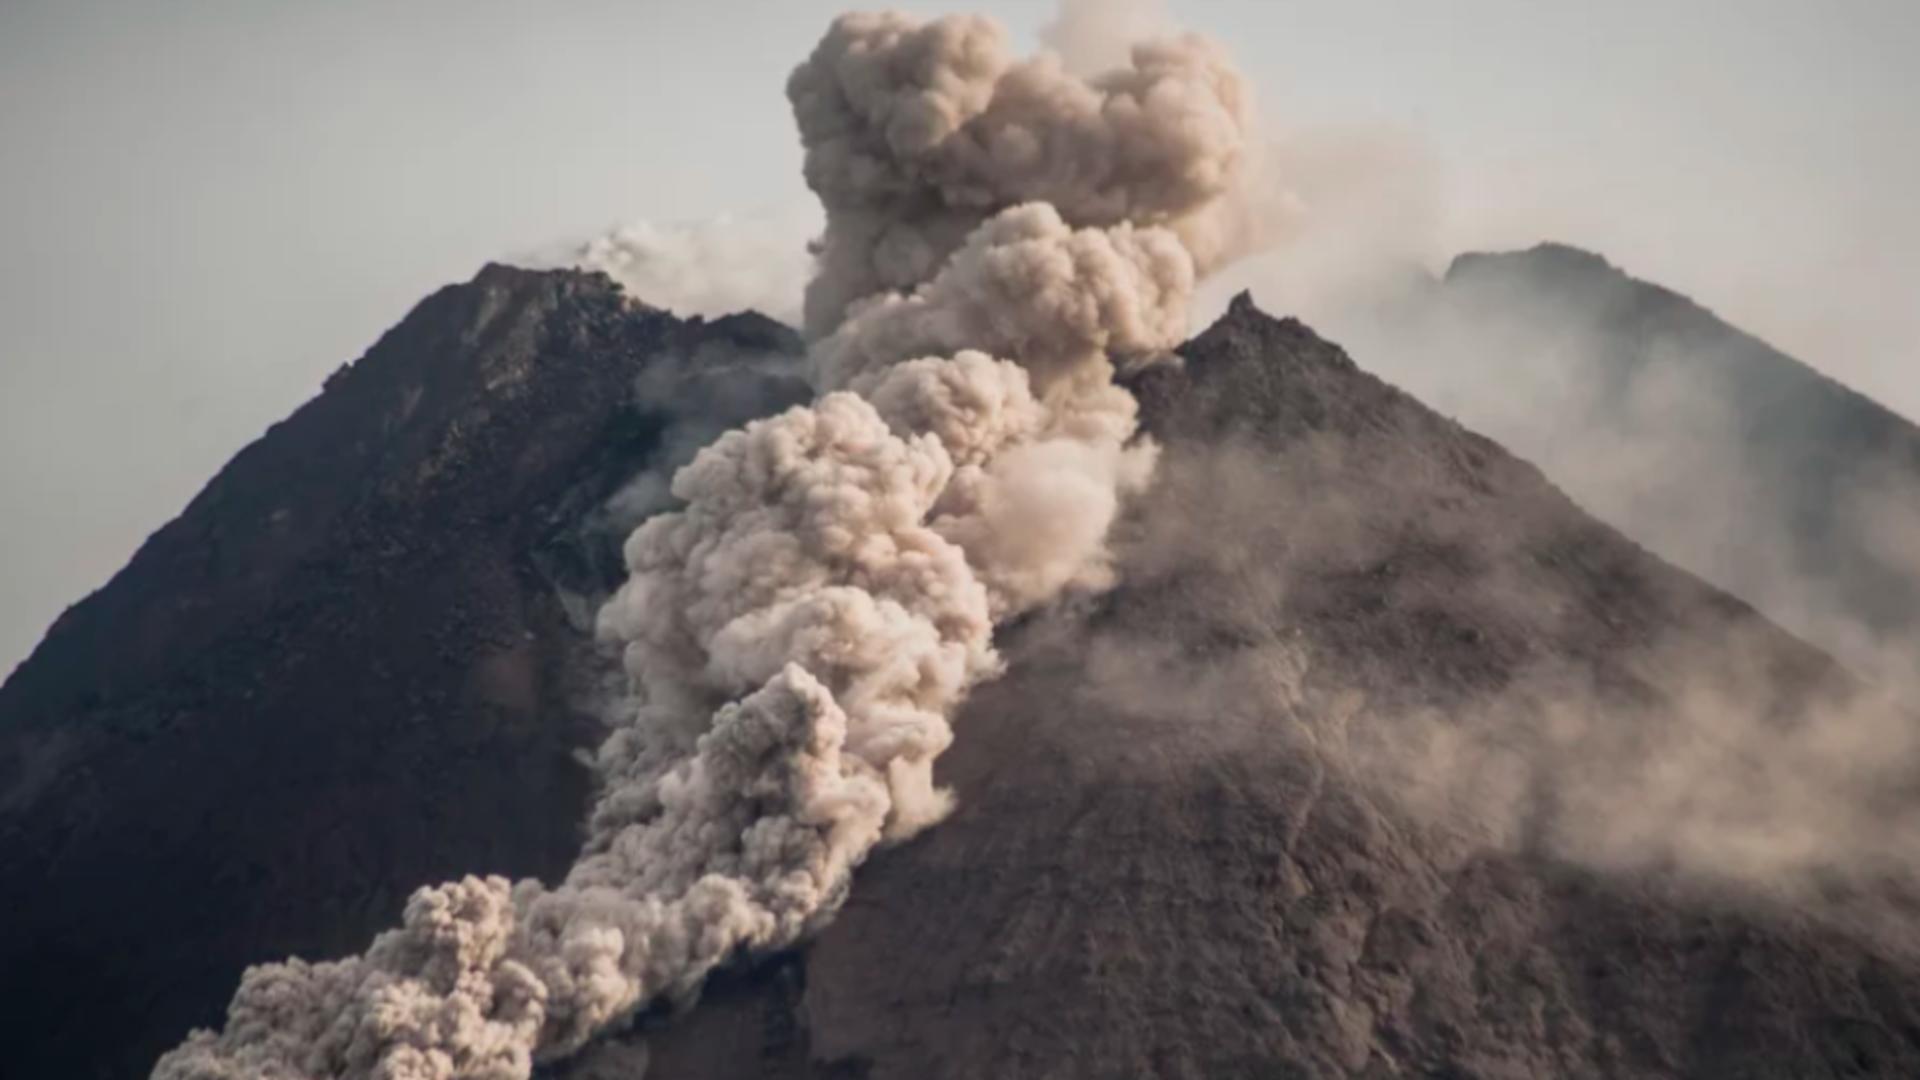 Erupție vulcan Merapi, Indonezia - imagine de arhivă